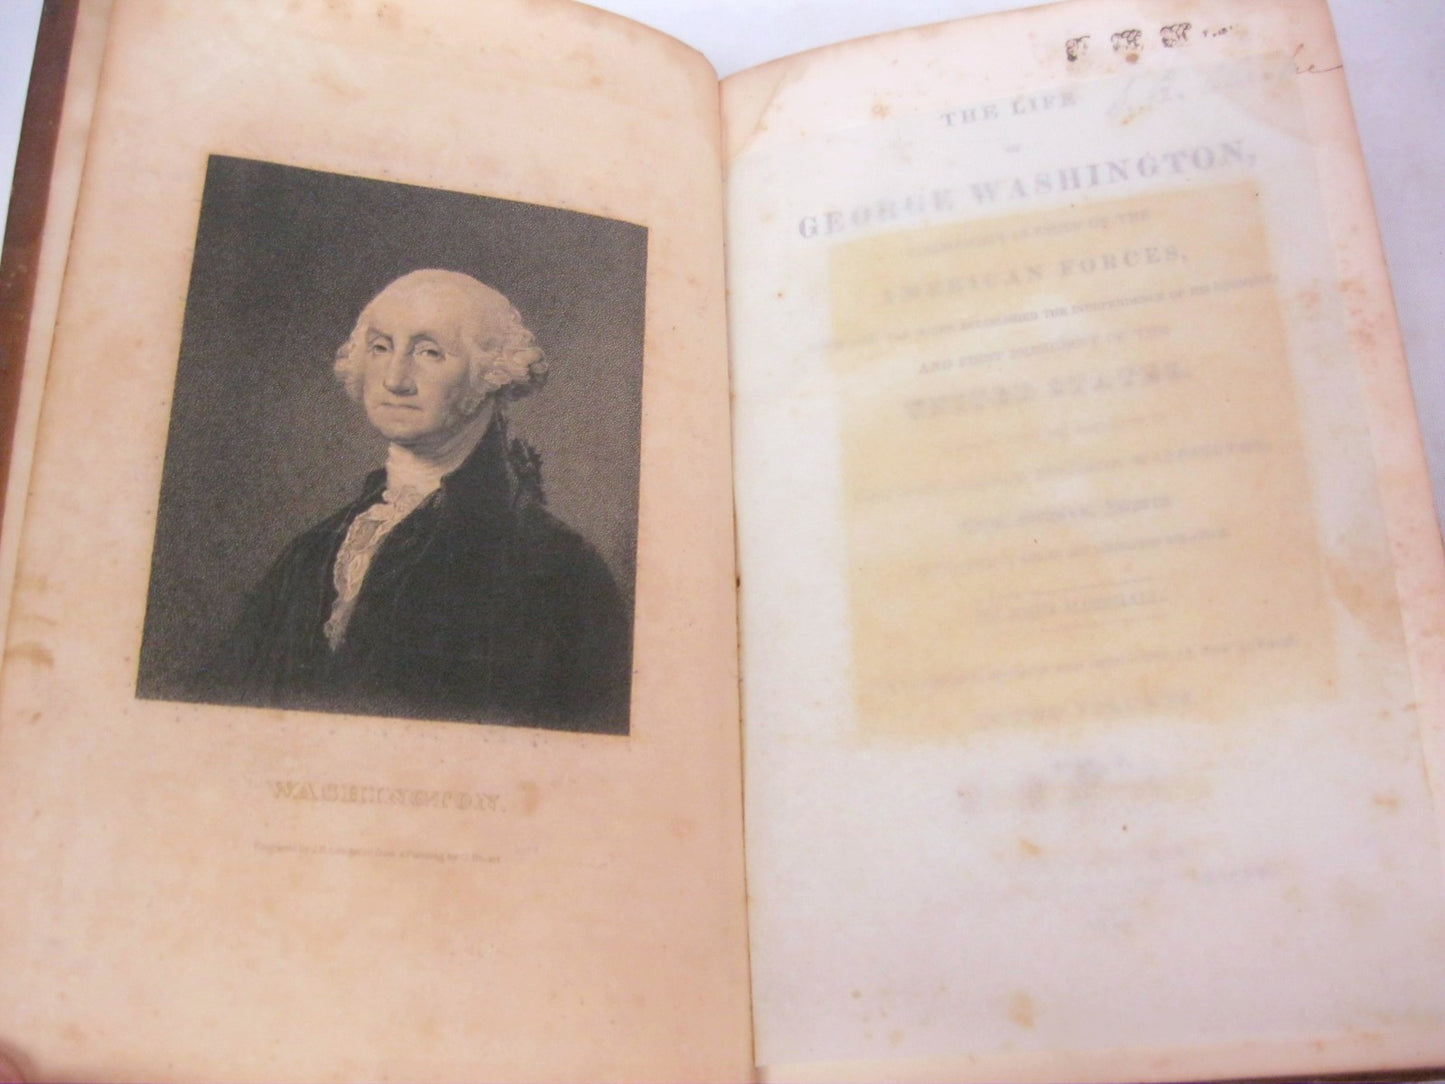 Life of George Washington by James Marshall